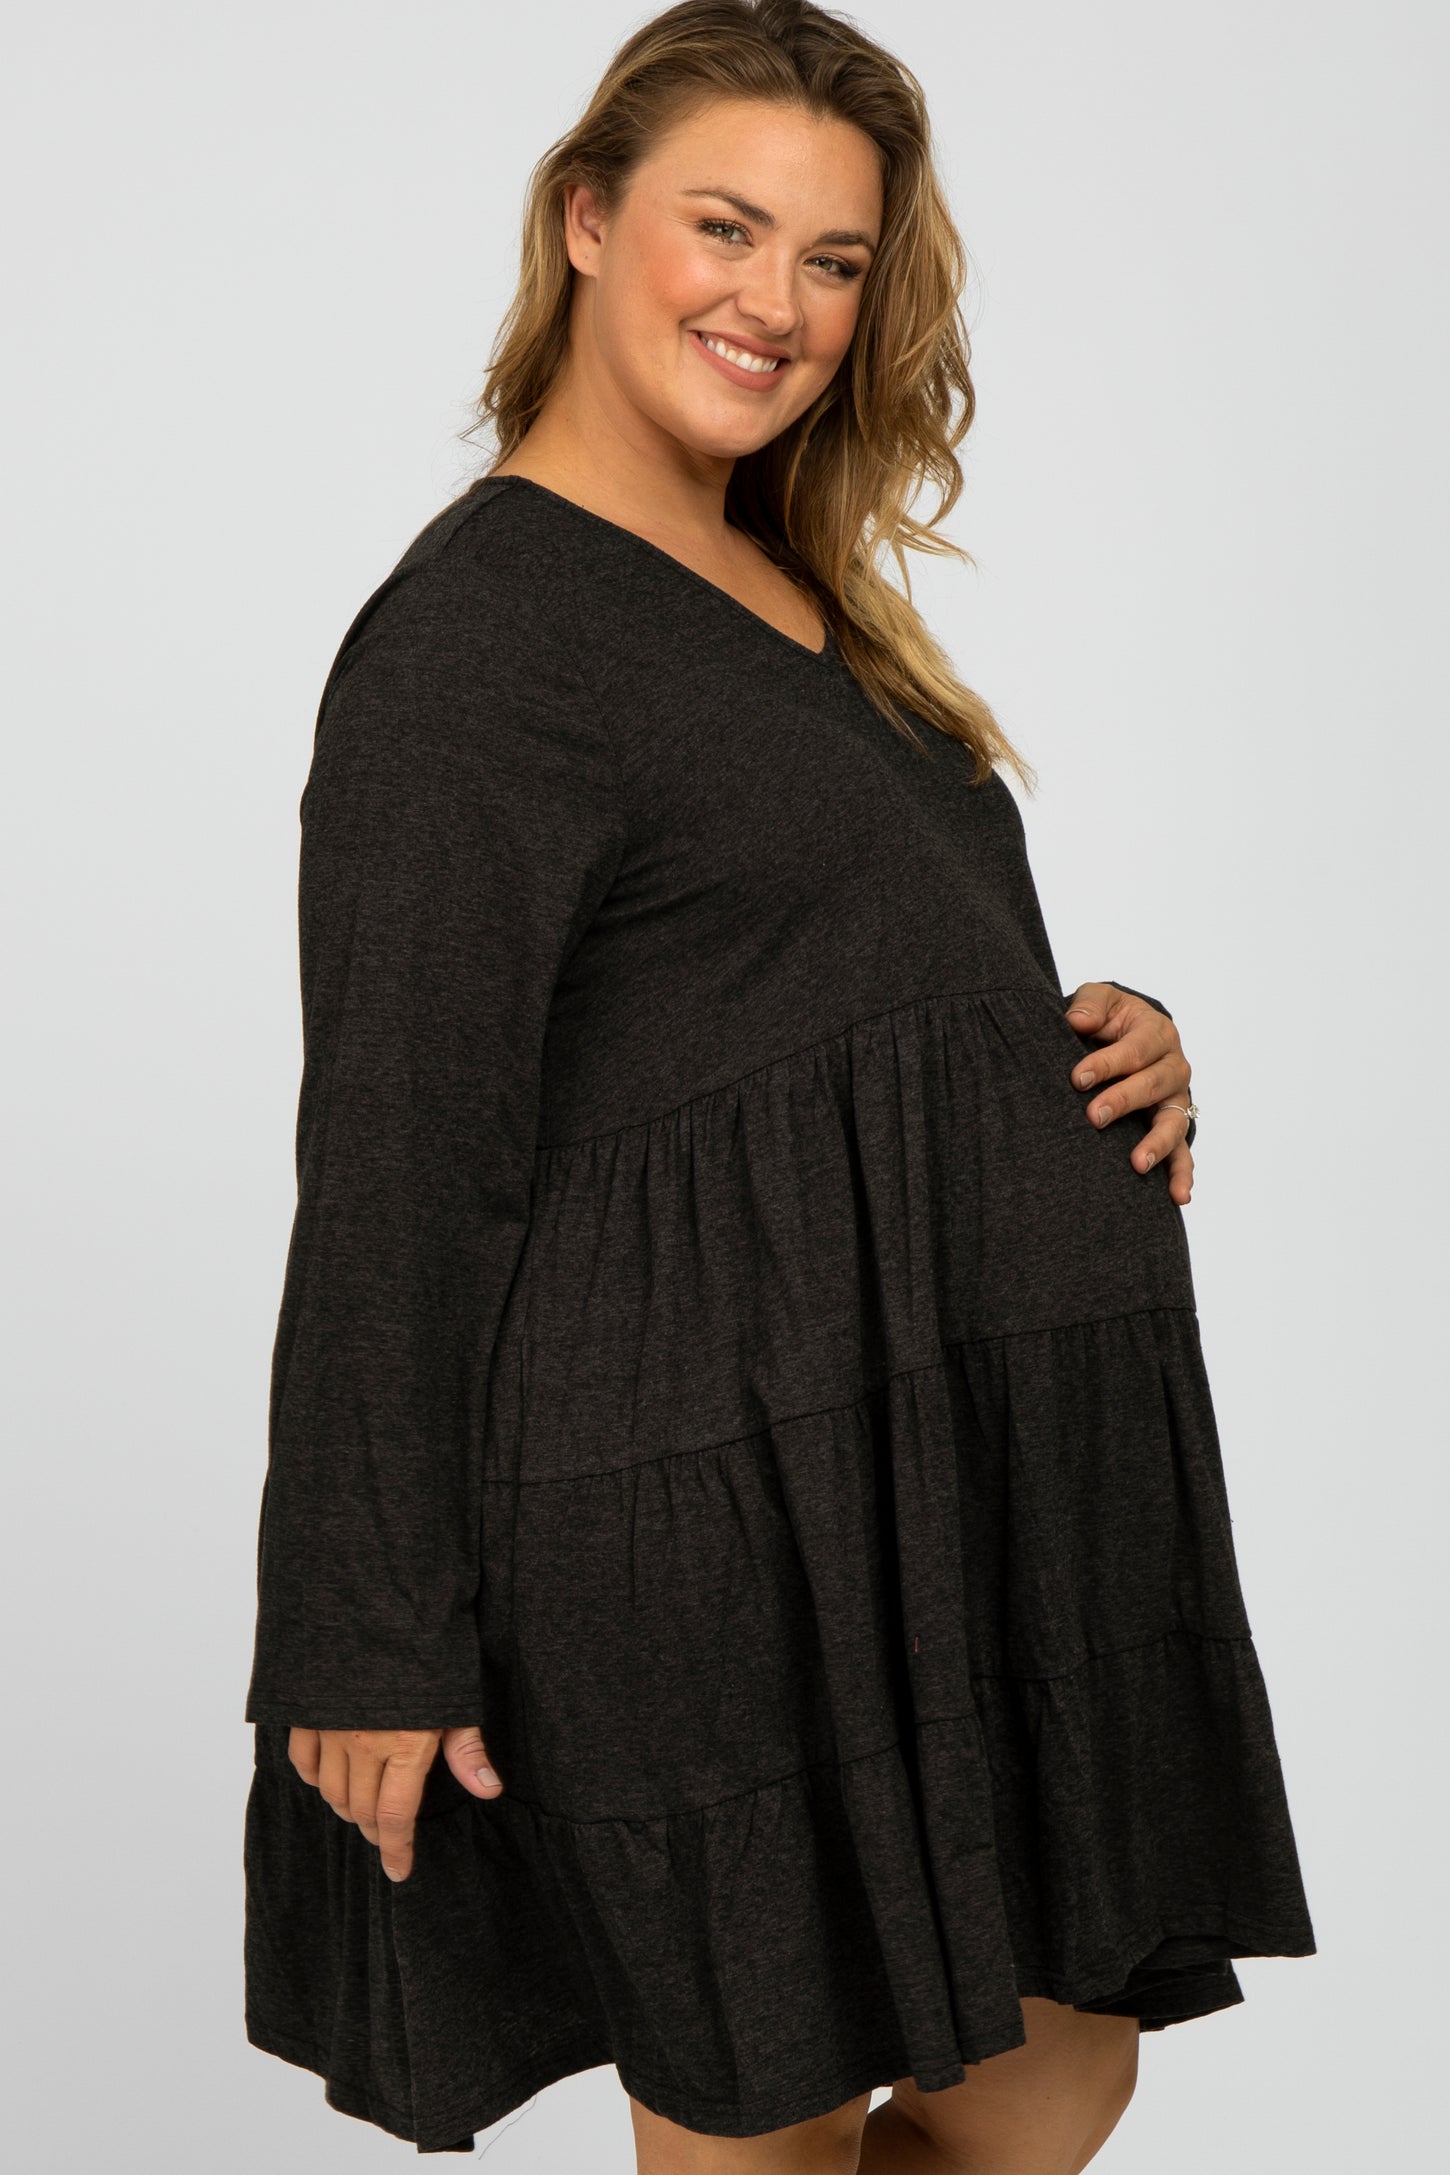 Black Soft Knit Two Tone Tiered Plus Maternity Dress